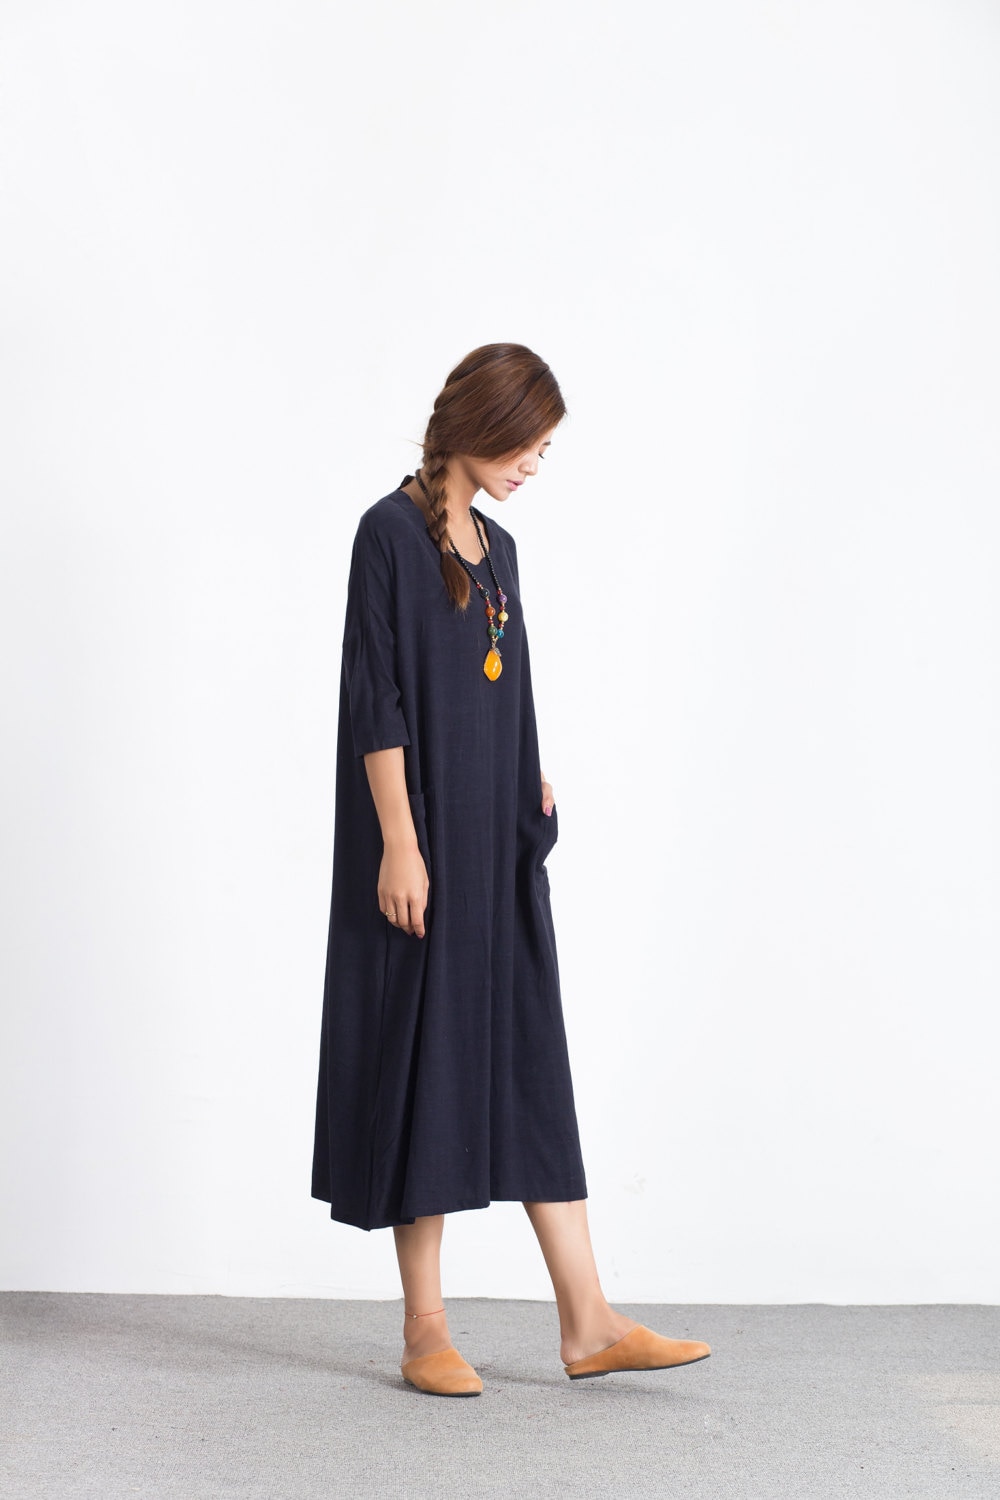 50% SALE 6 Cyan-Blue Short Sleeves Summer linen Dresses | Etsy